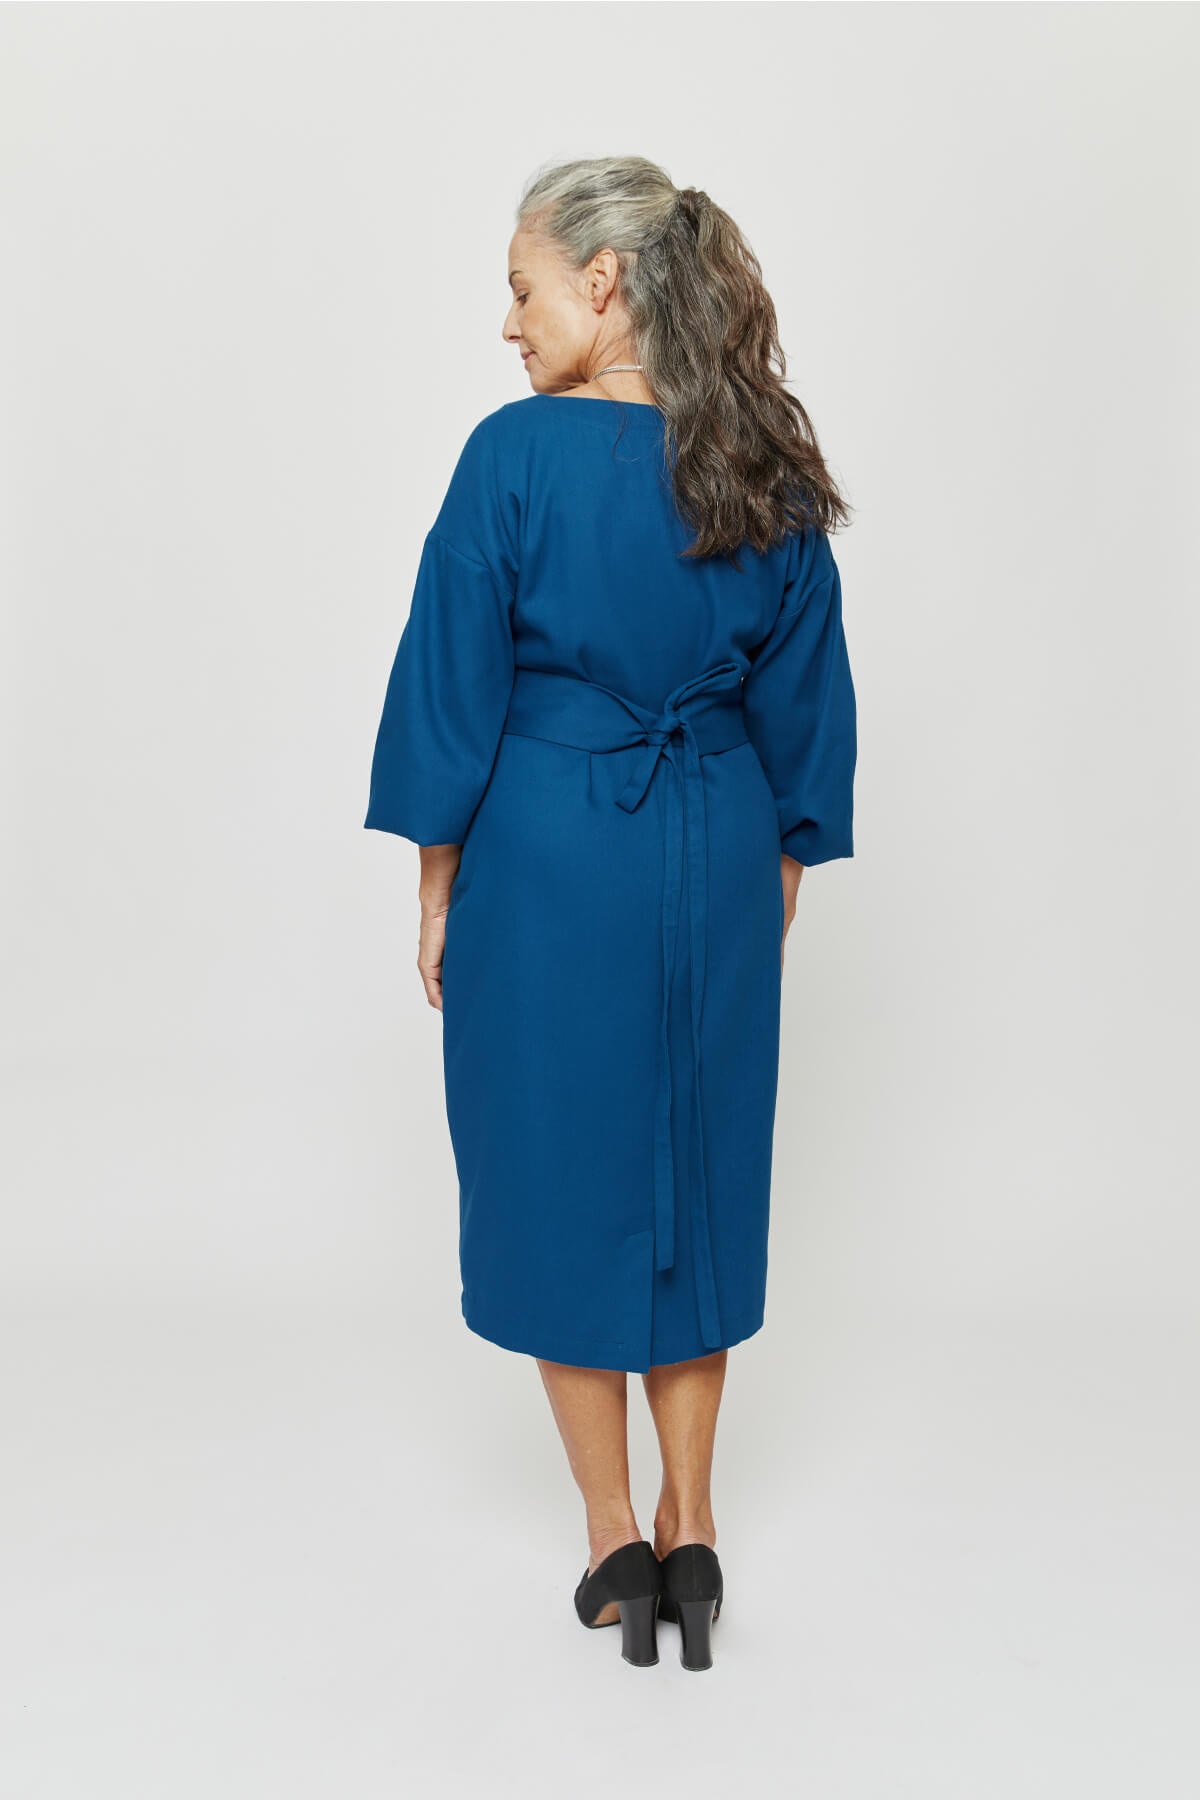 Stefanie | Winter Dress with Kimono Belt in Petrol-Blue